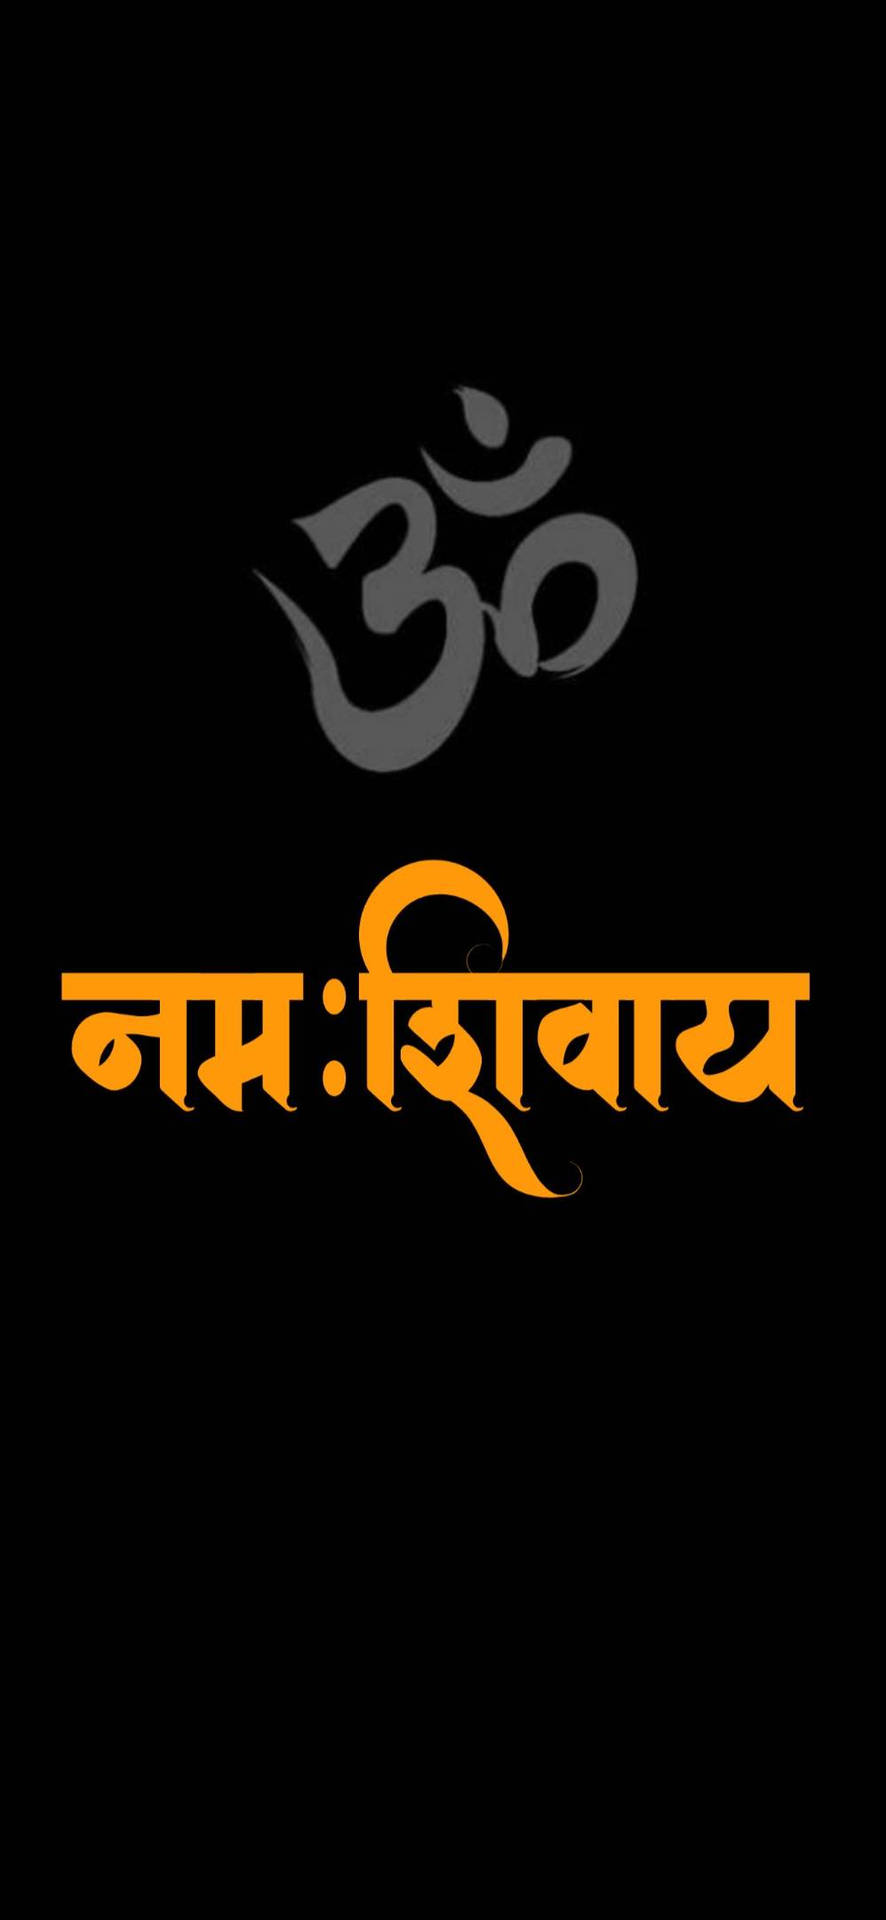 Mahakal Hindu Mantra Background